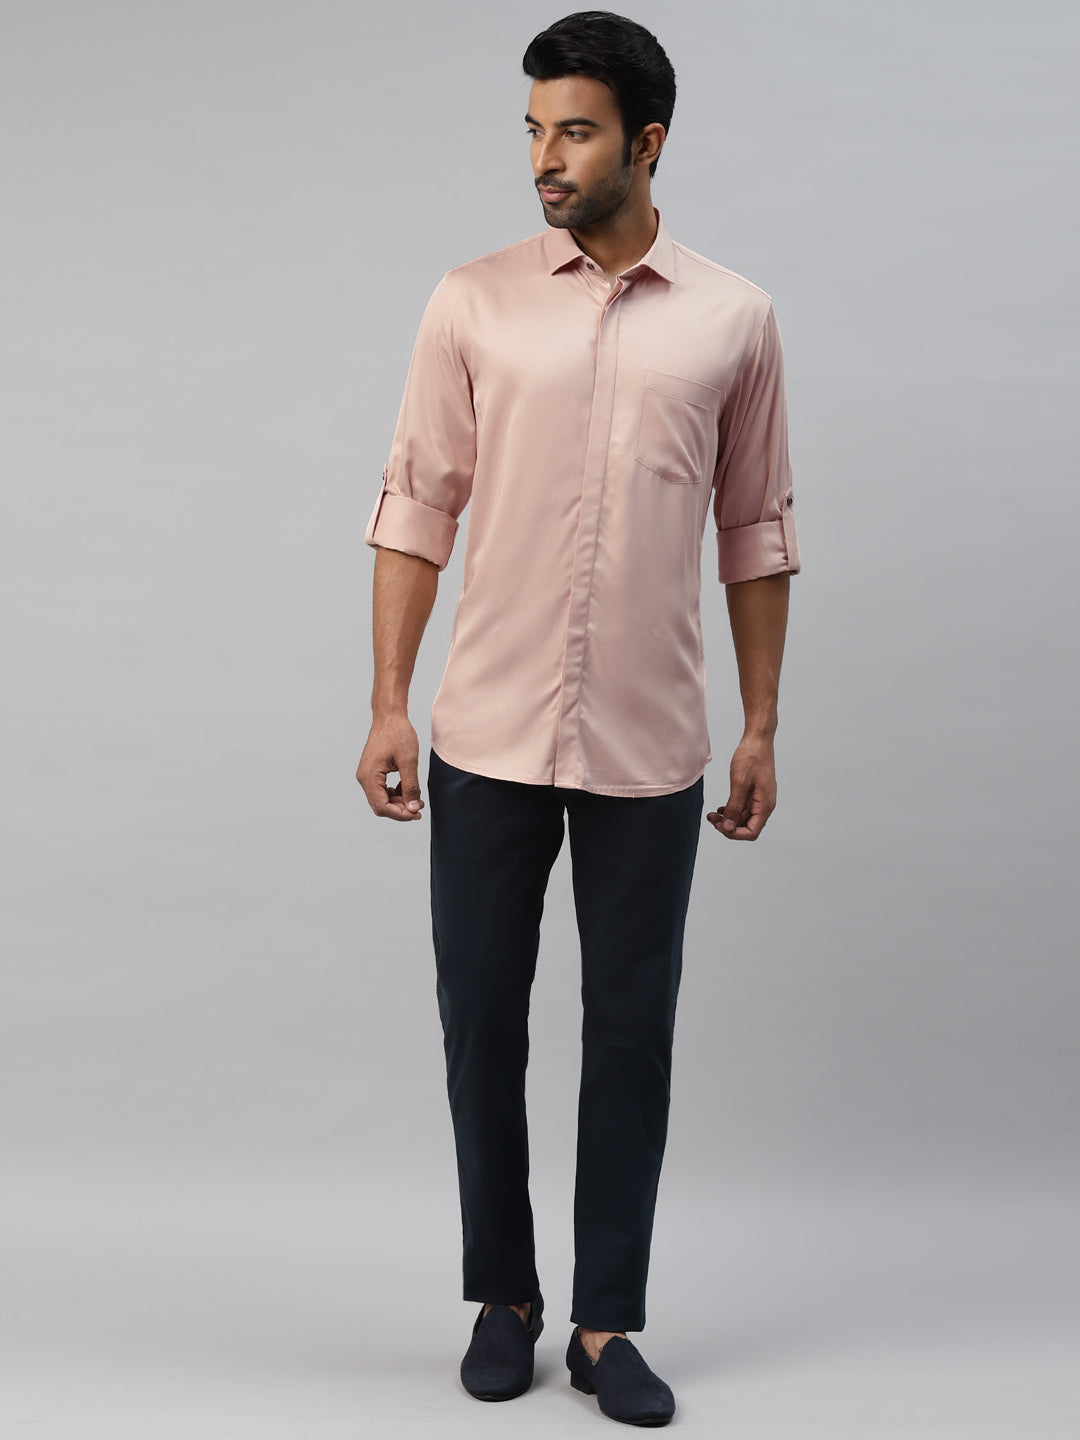 Don Vino Men's Pink Solid Slim Fit Shirt